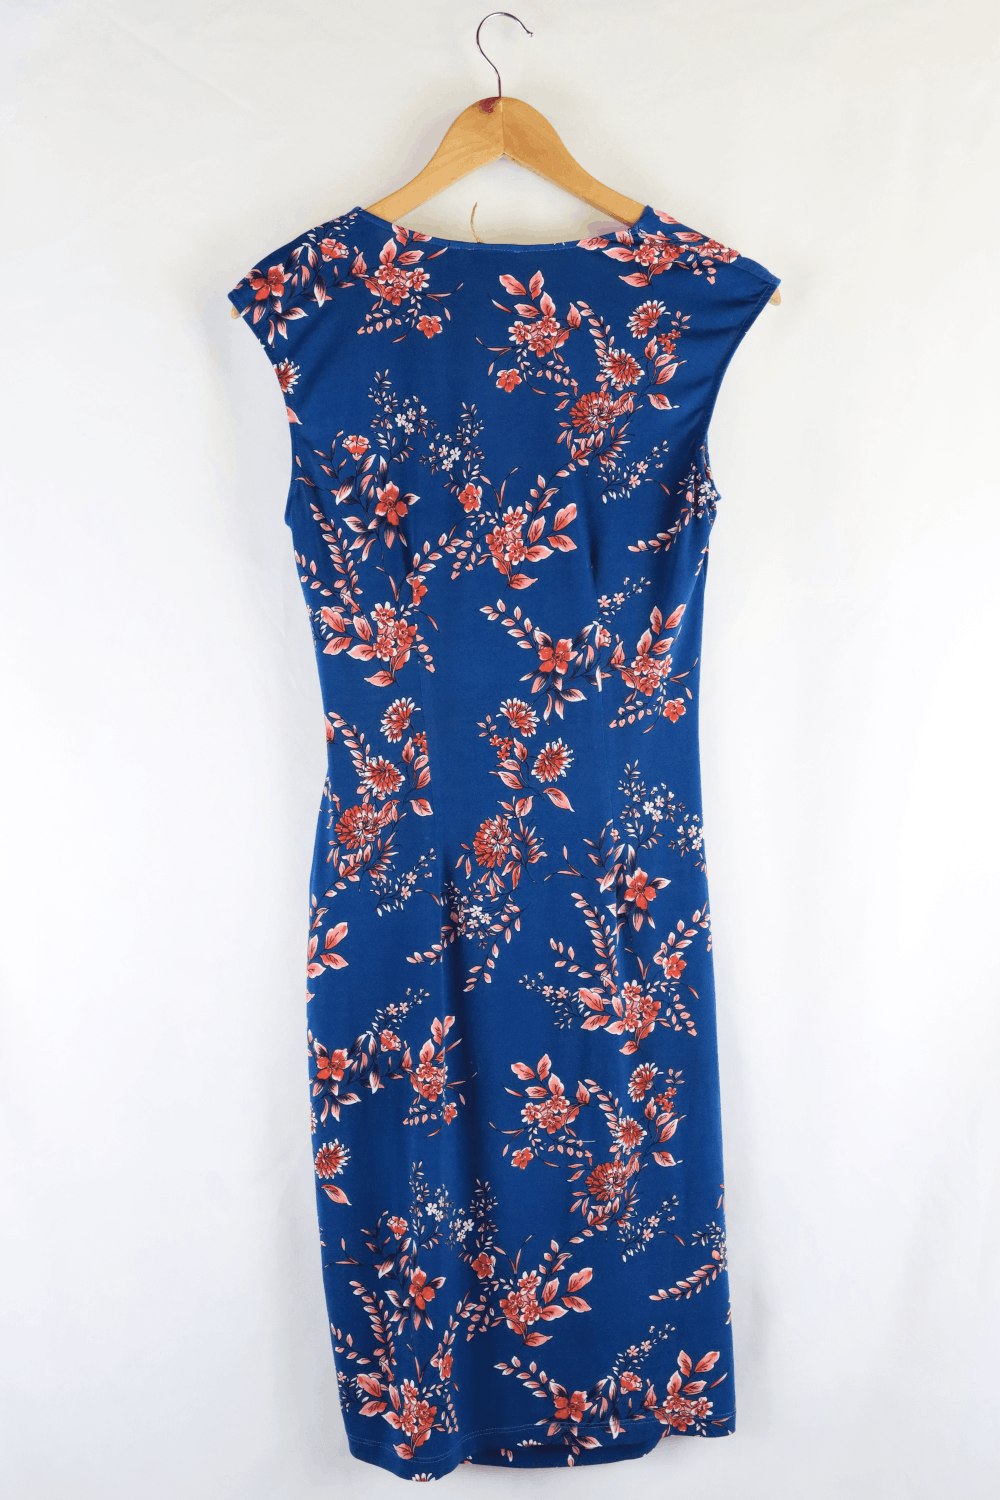 Leona By Leona Edmiston Blue Floral Dress 8